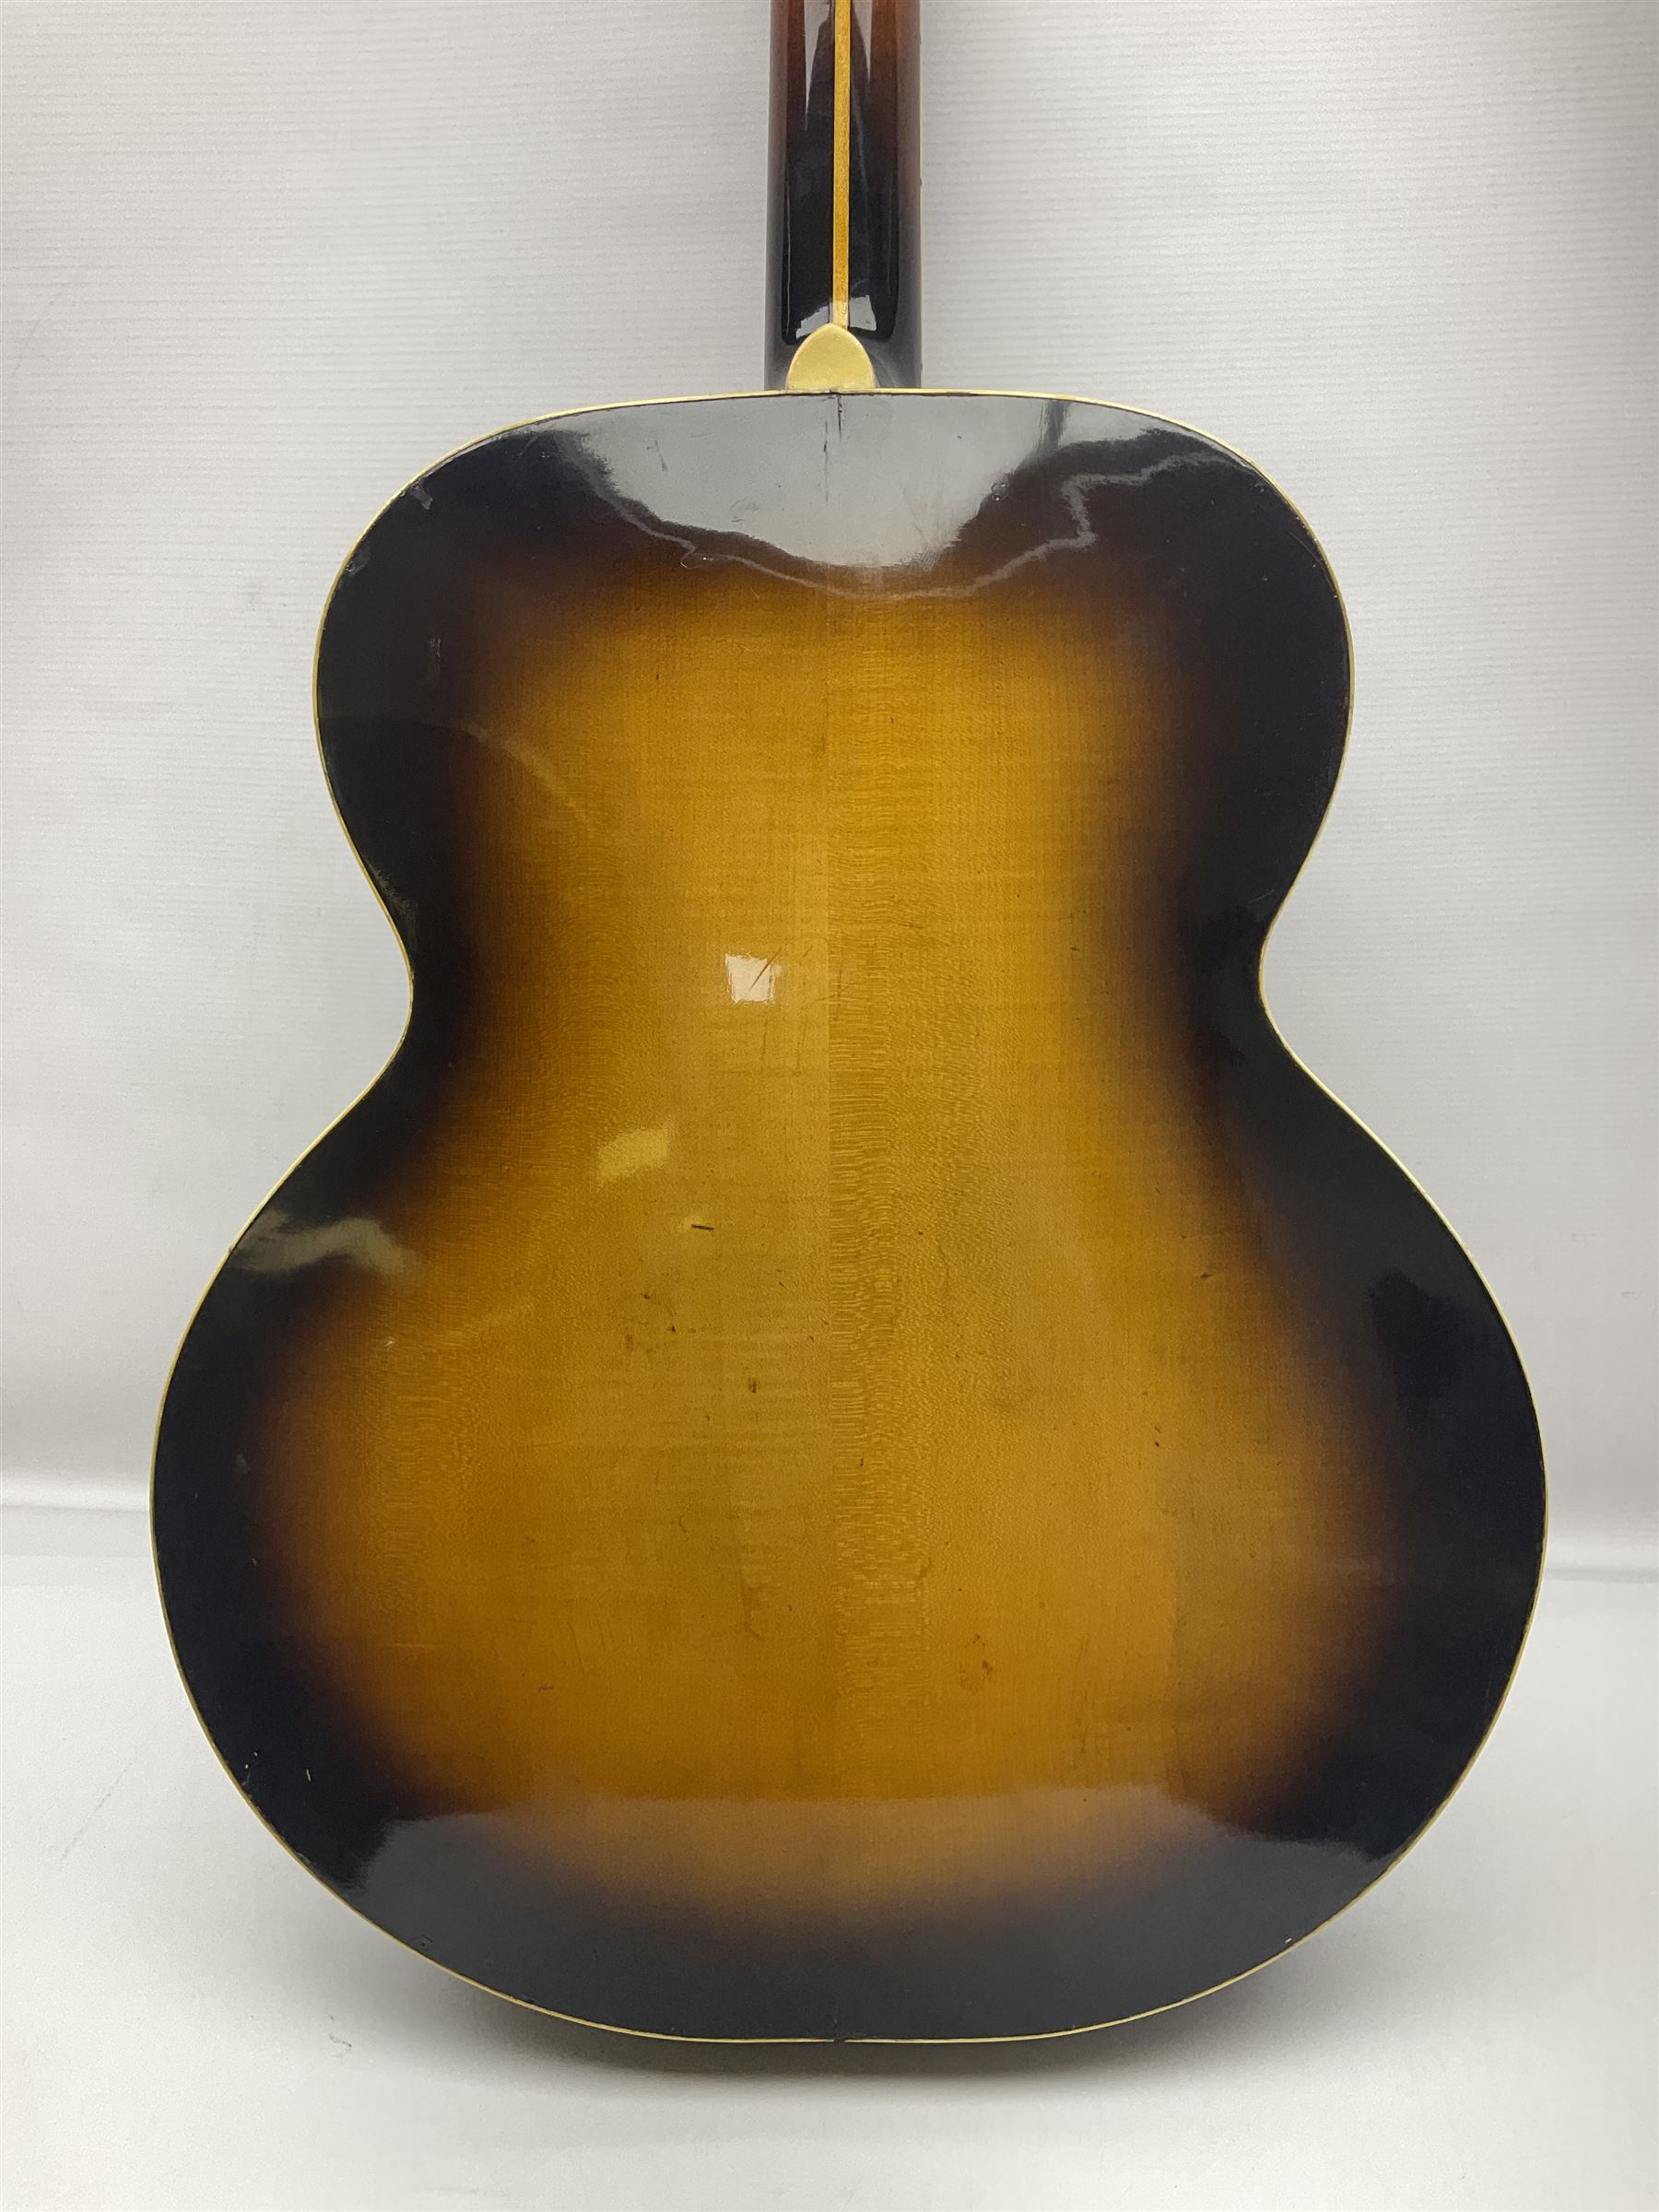 Clifford Essex Paragon De Luxe handmade acoustic guitar c1936 with tobacco sunburst finish and origi - Image 13 of 24